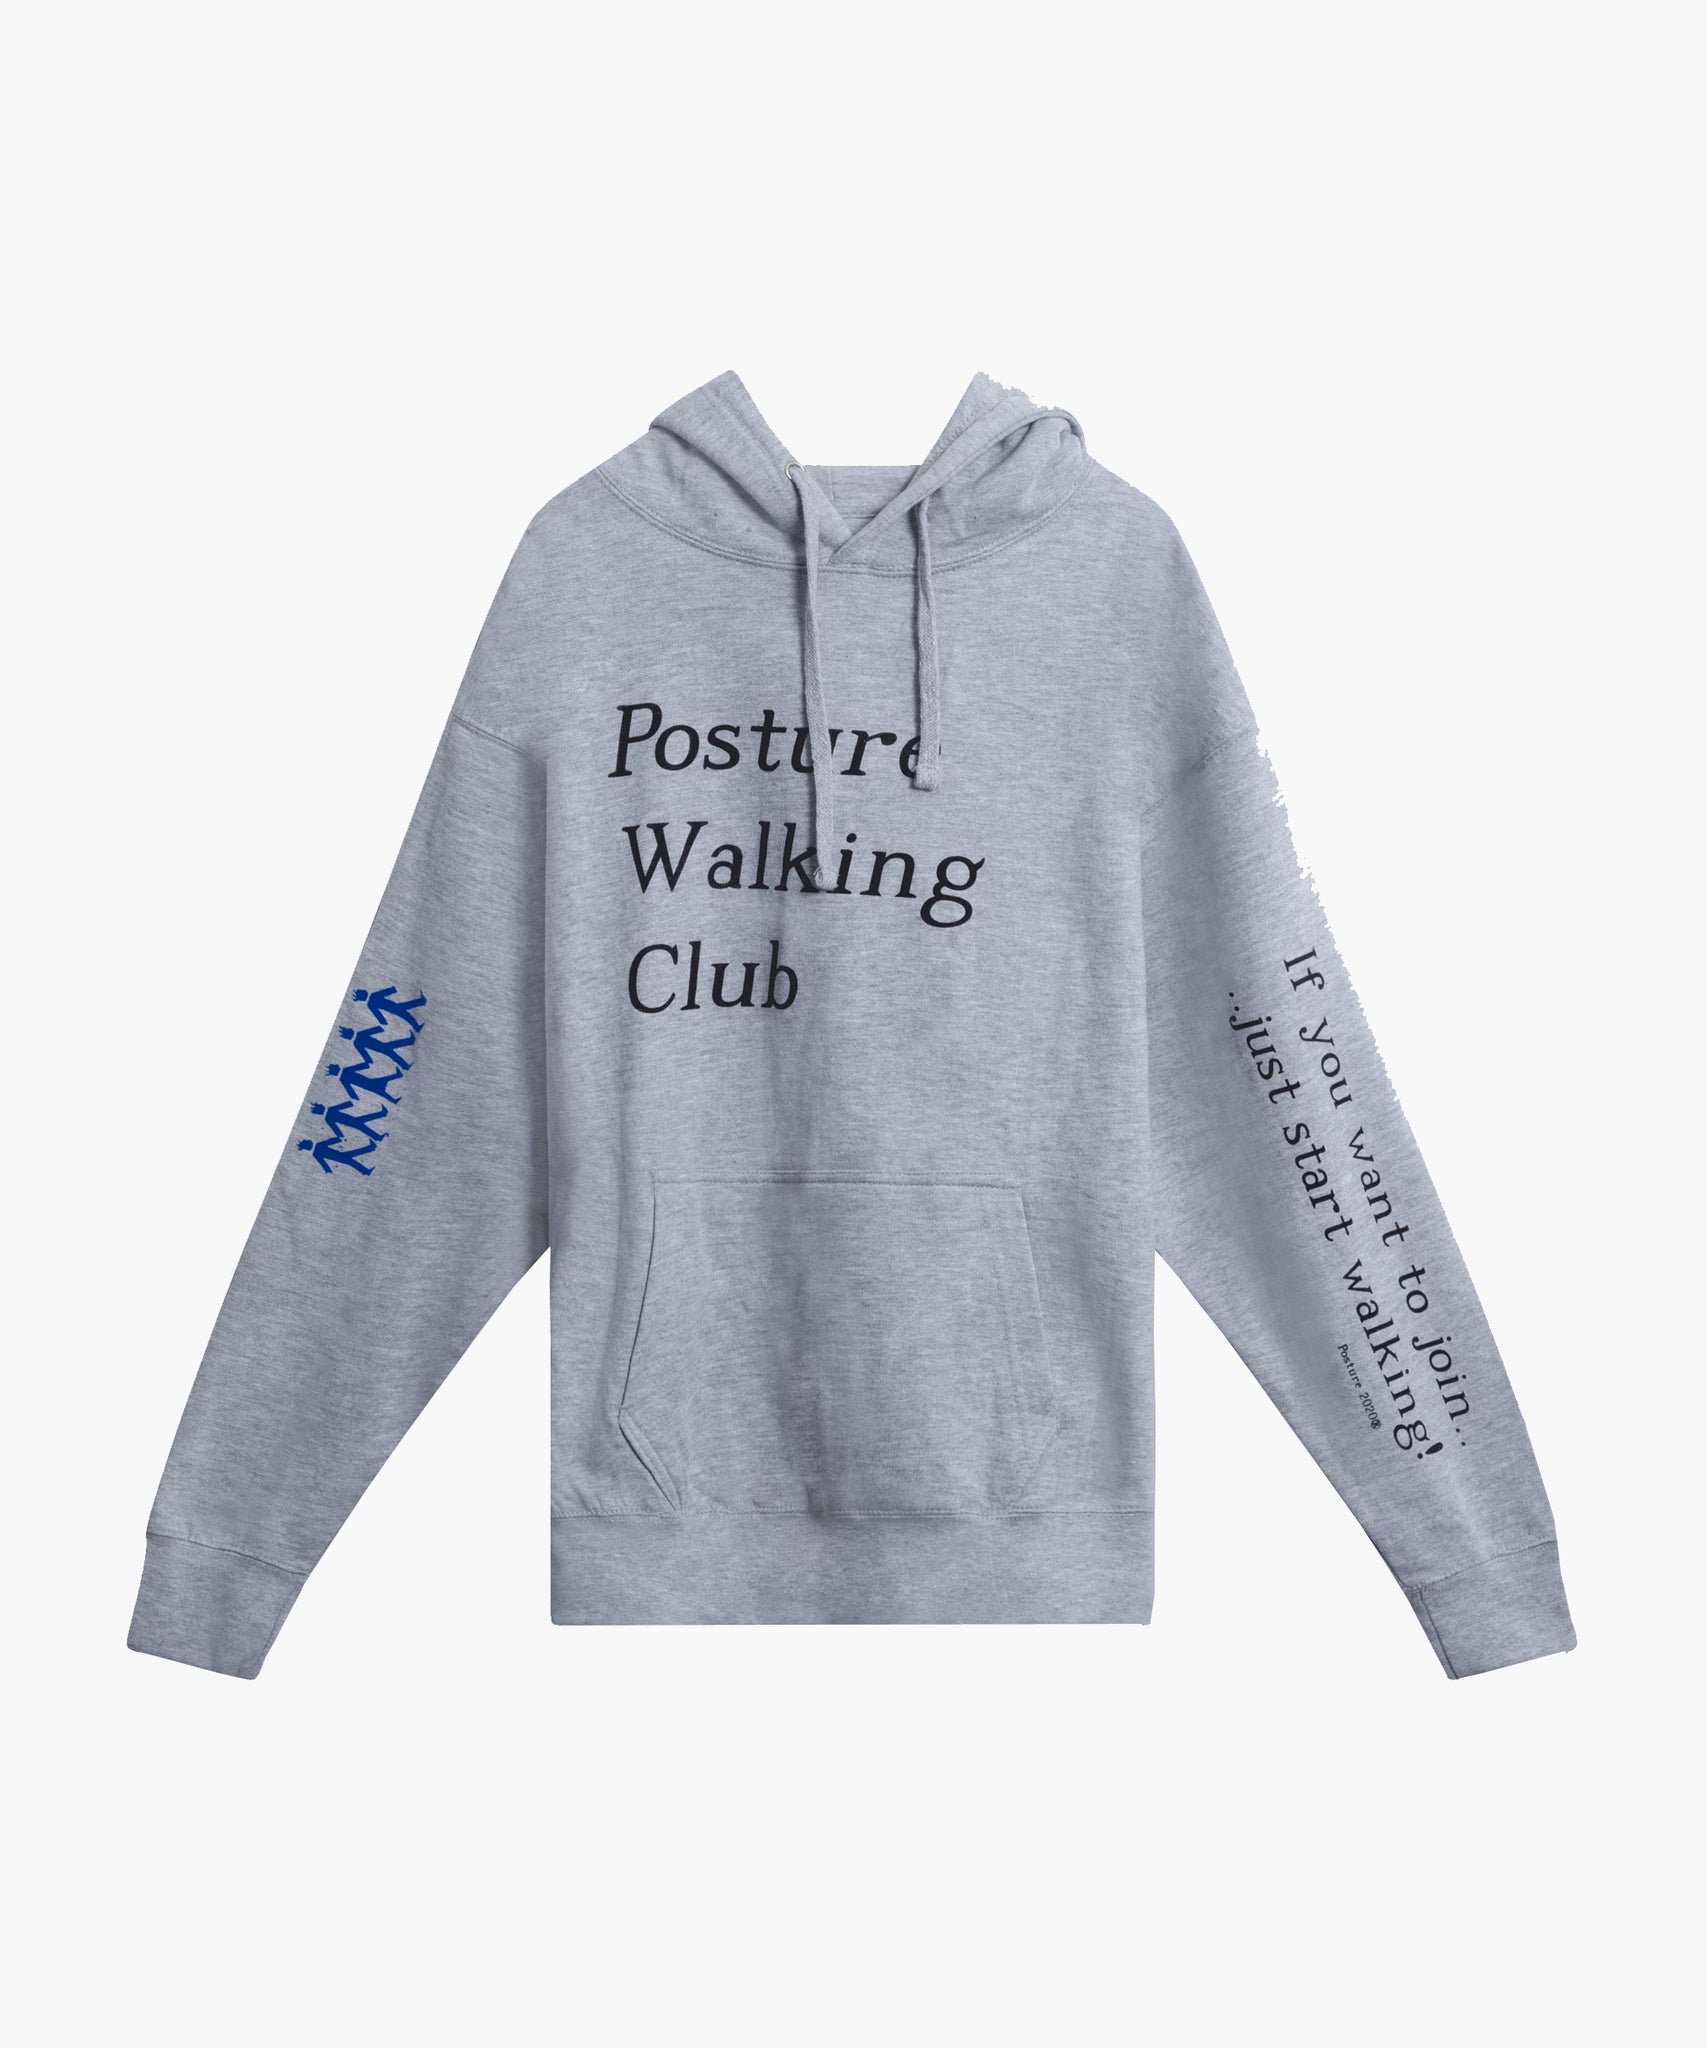 Posture Walking Club Pullover - Grey